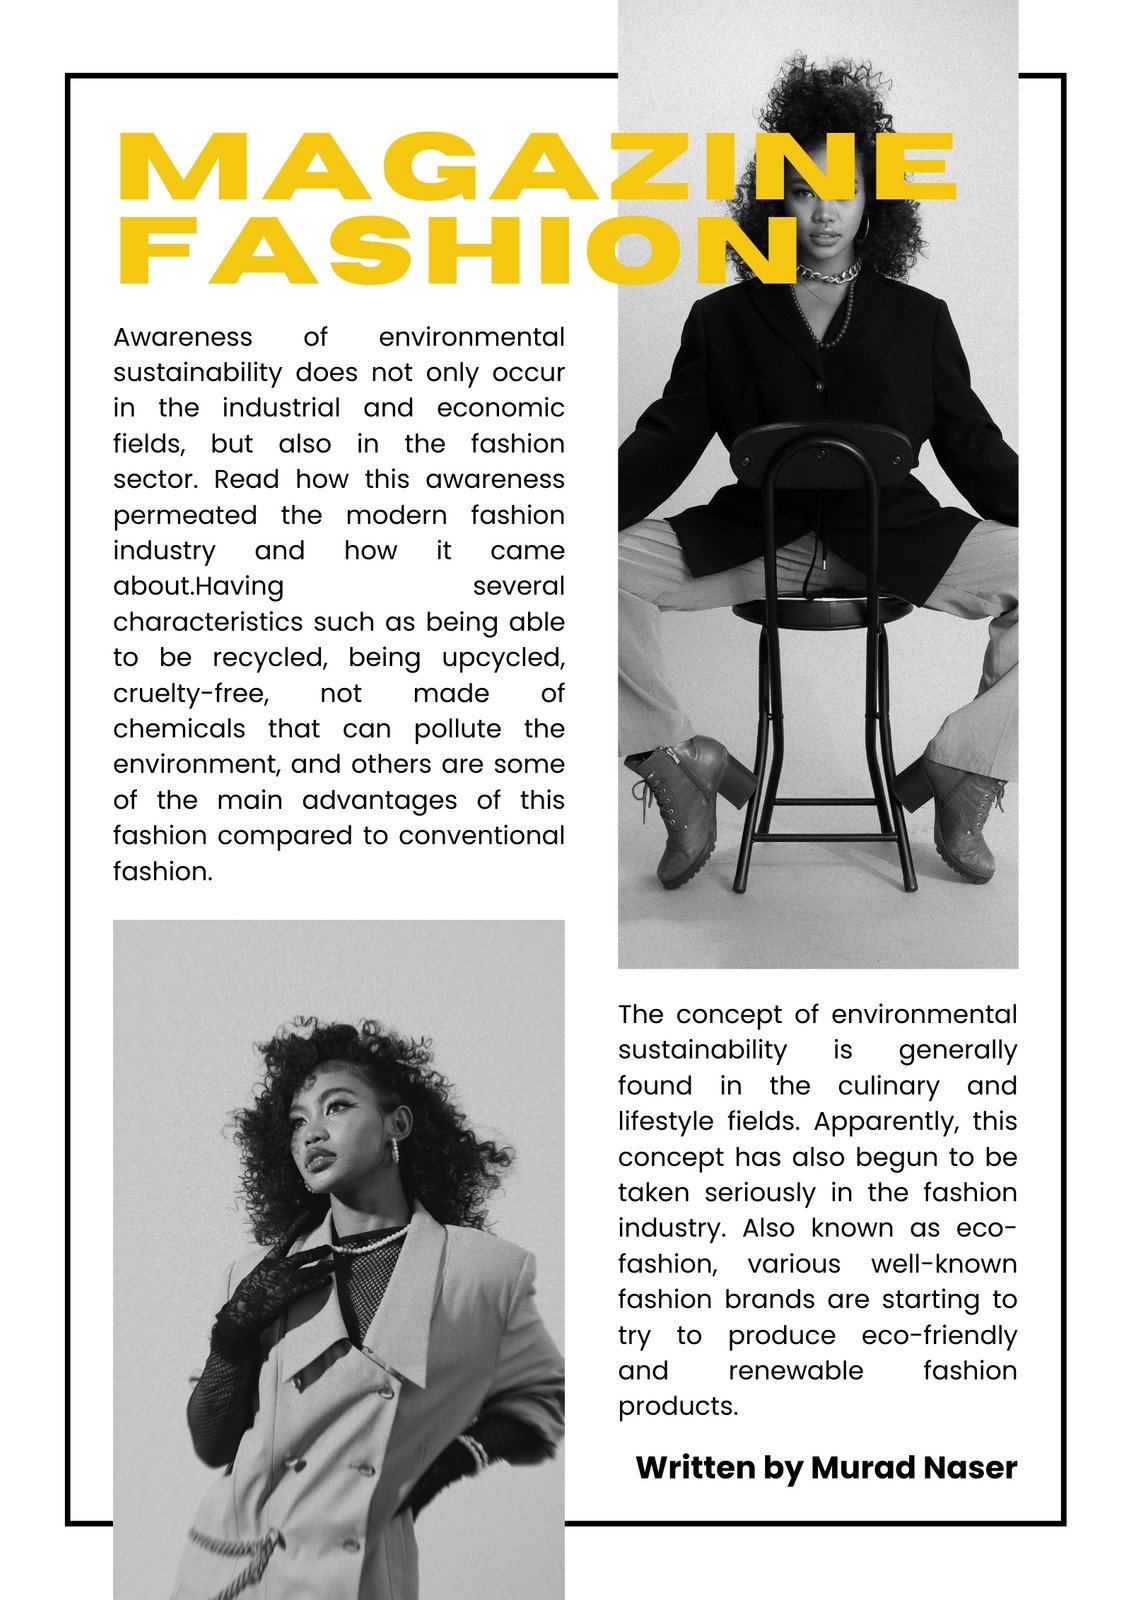 Fashion Magazine Articles